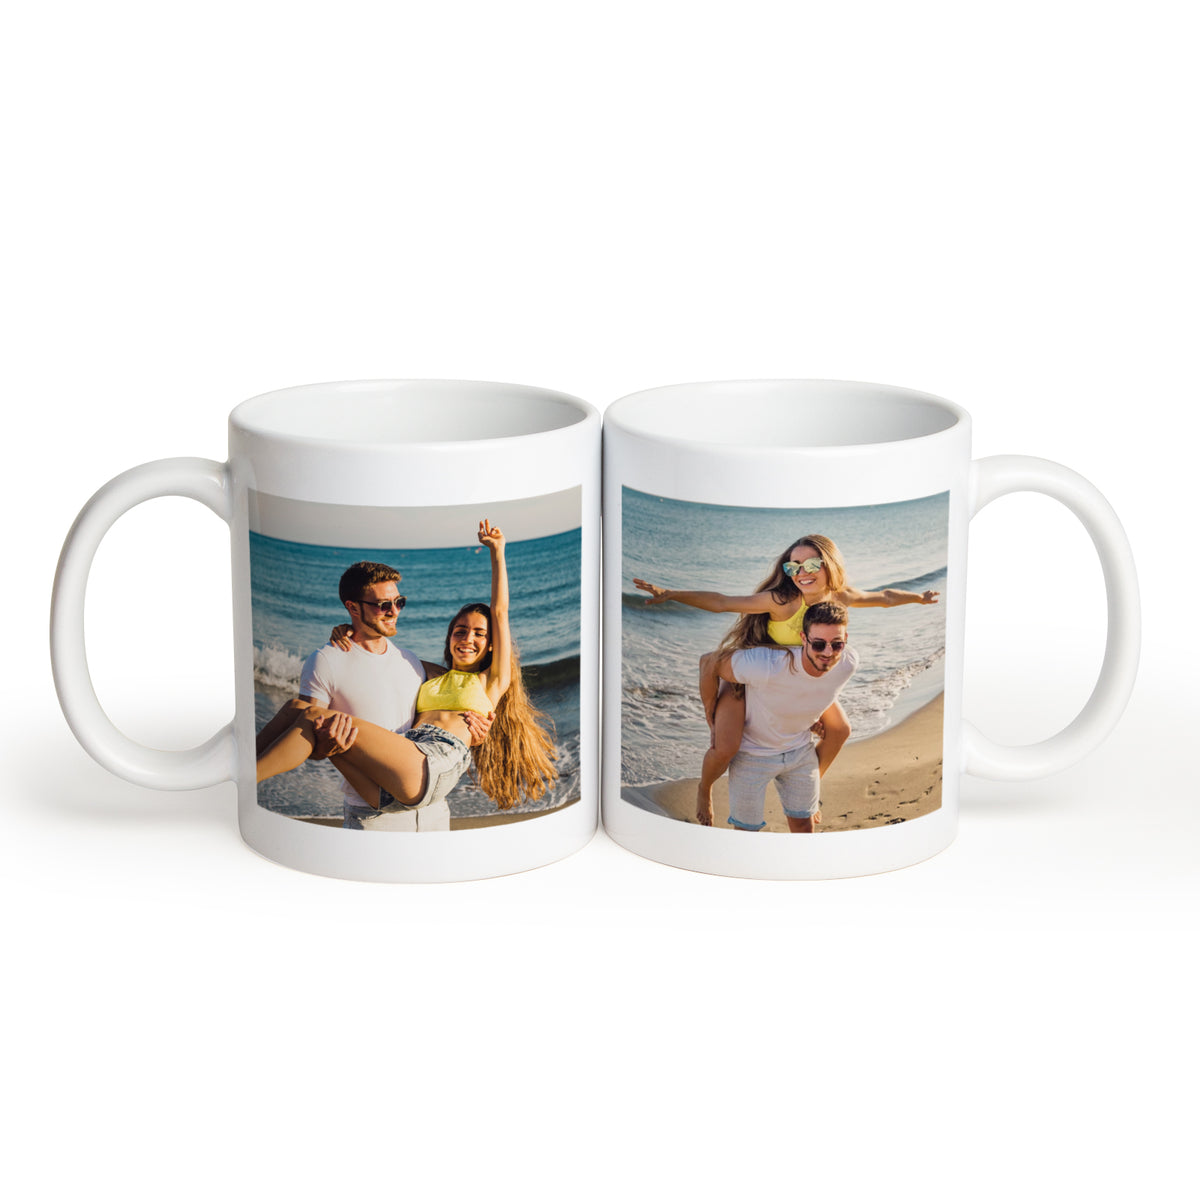 Customizedbee Couple Mug Set of 2- Ceramic Coffee Mug with Custom Photo Name Text